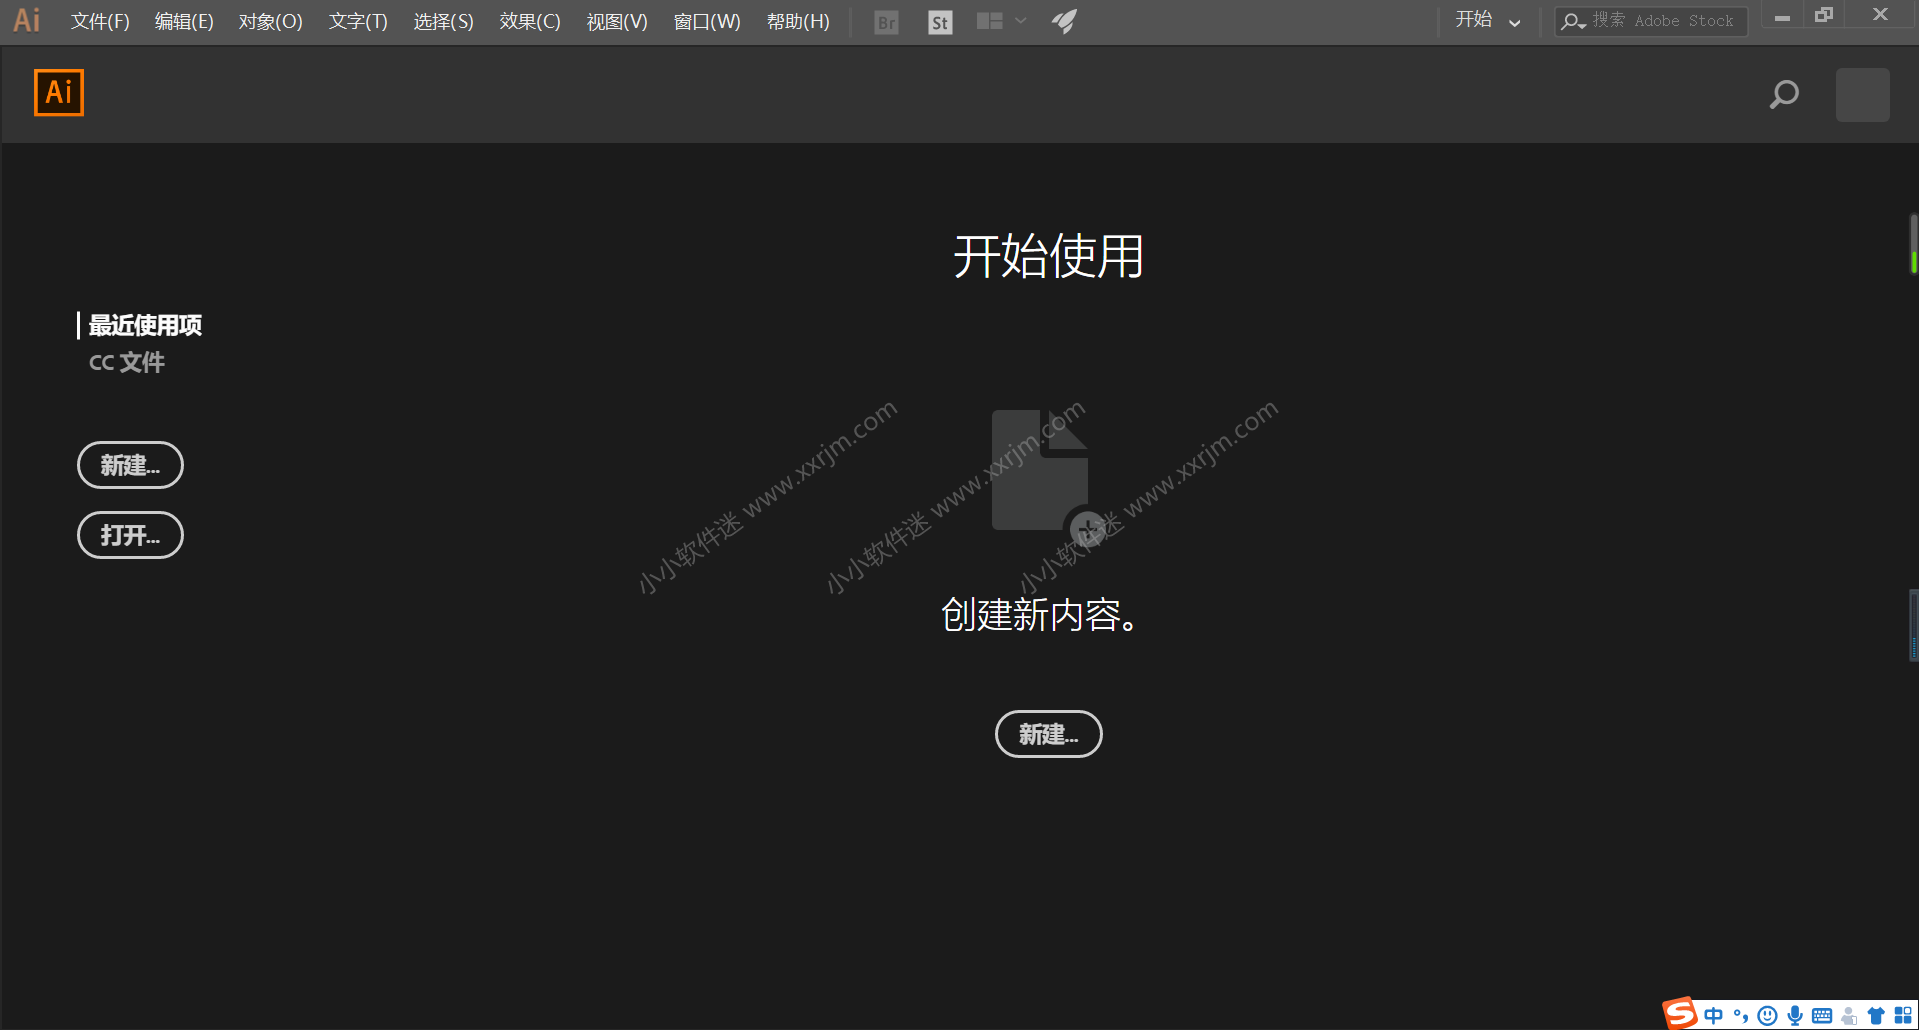 Adobe Illustrator CC2018绿色简体中文版下载地址和安装教程